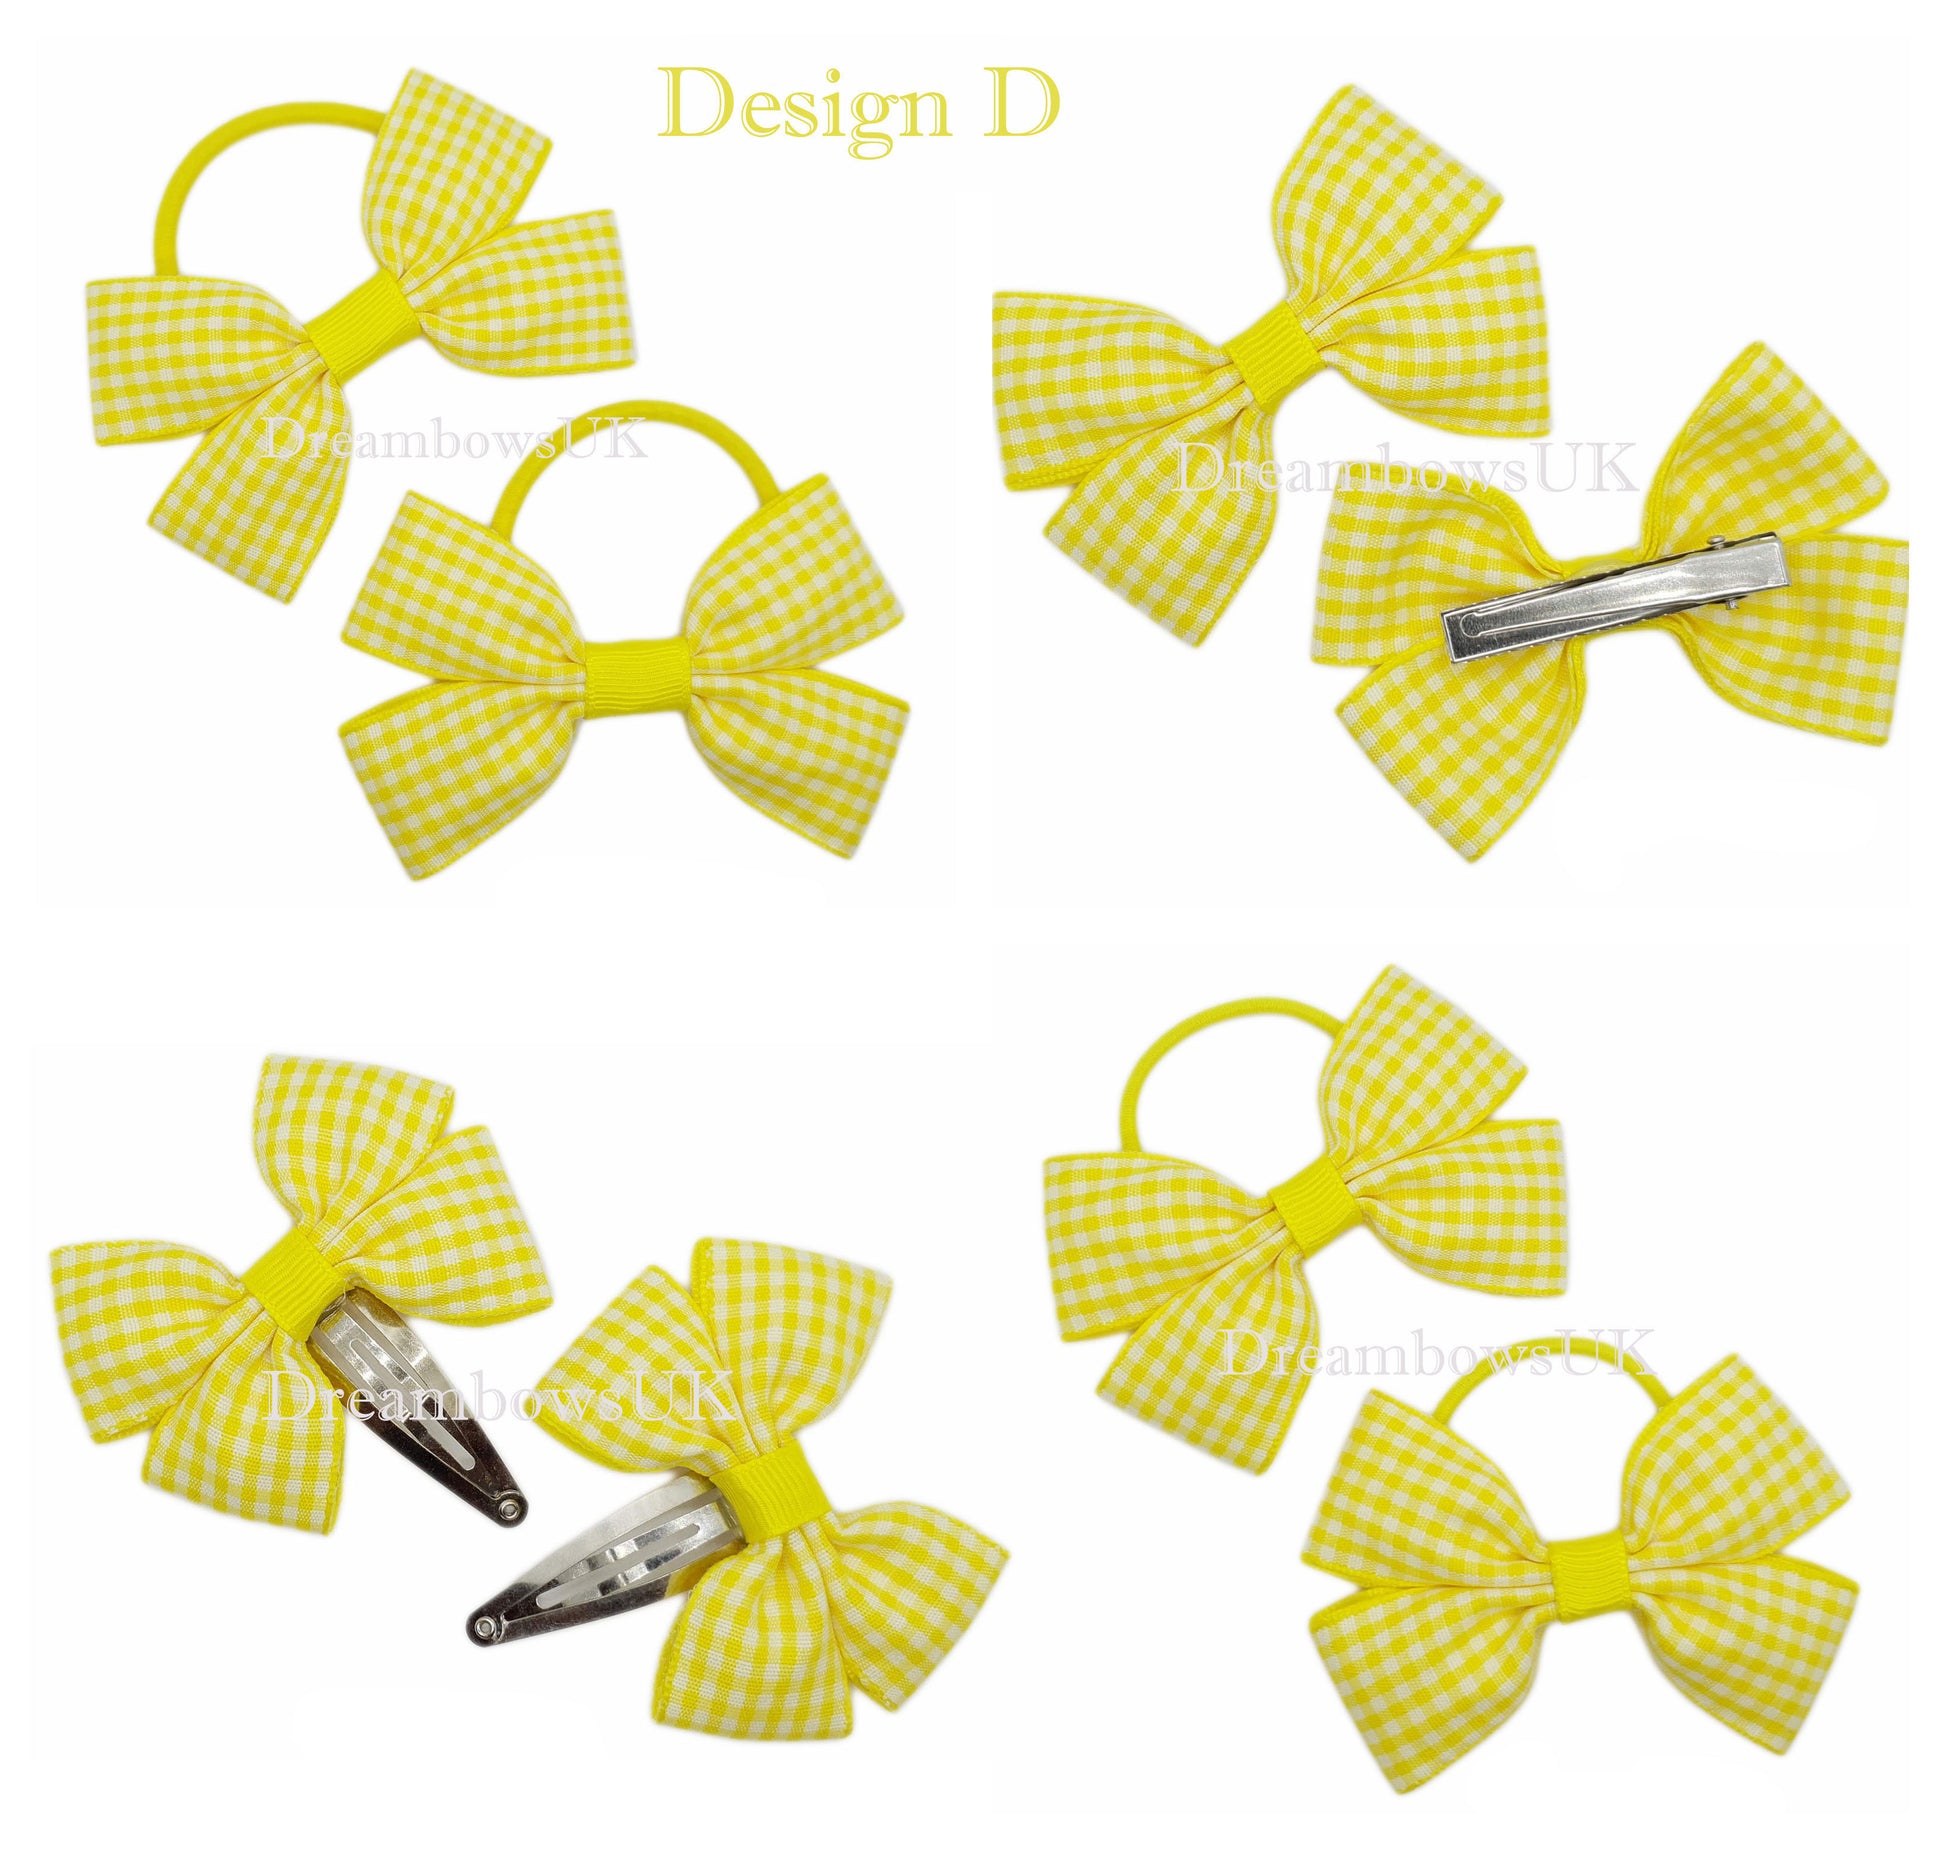 2x Yellow gingham hair bows - DreambowsUK